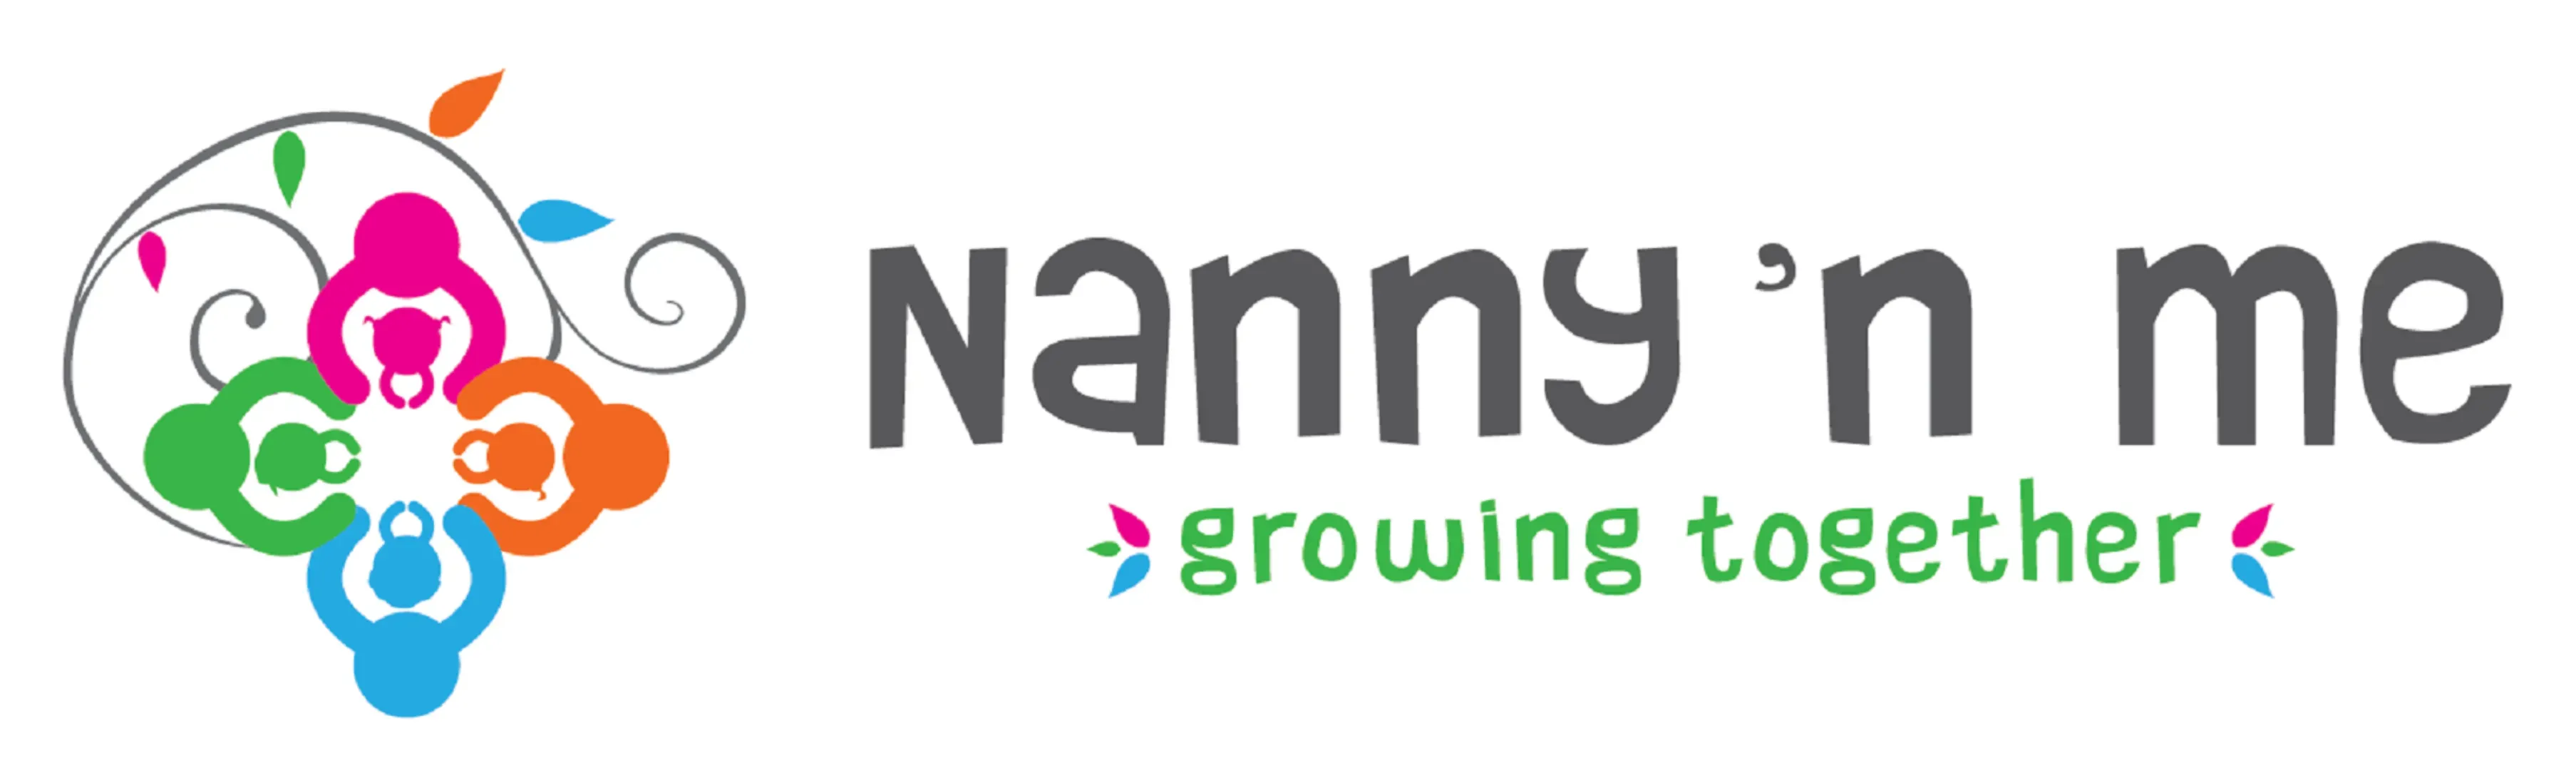 nanny n me growing together